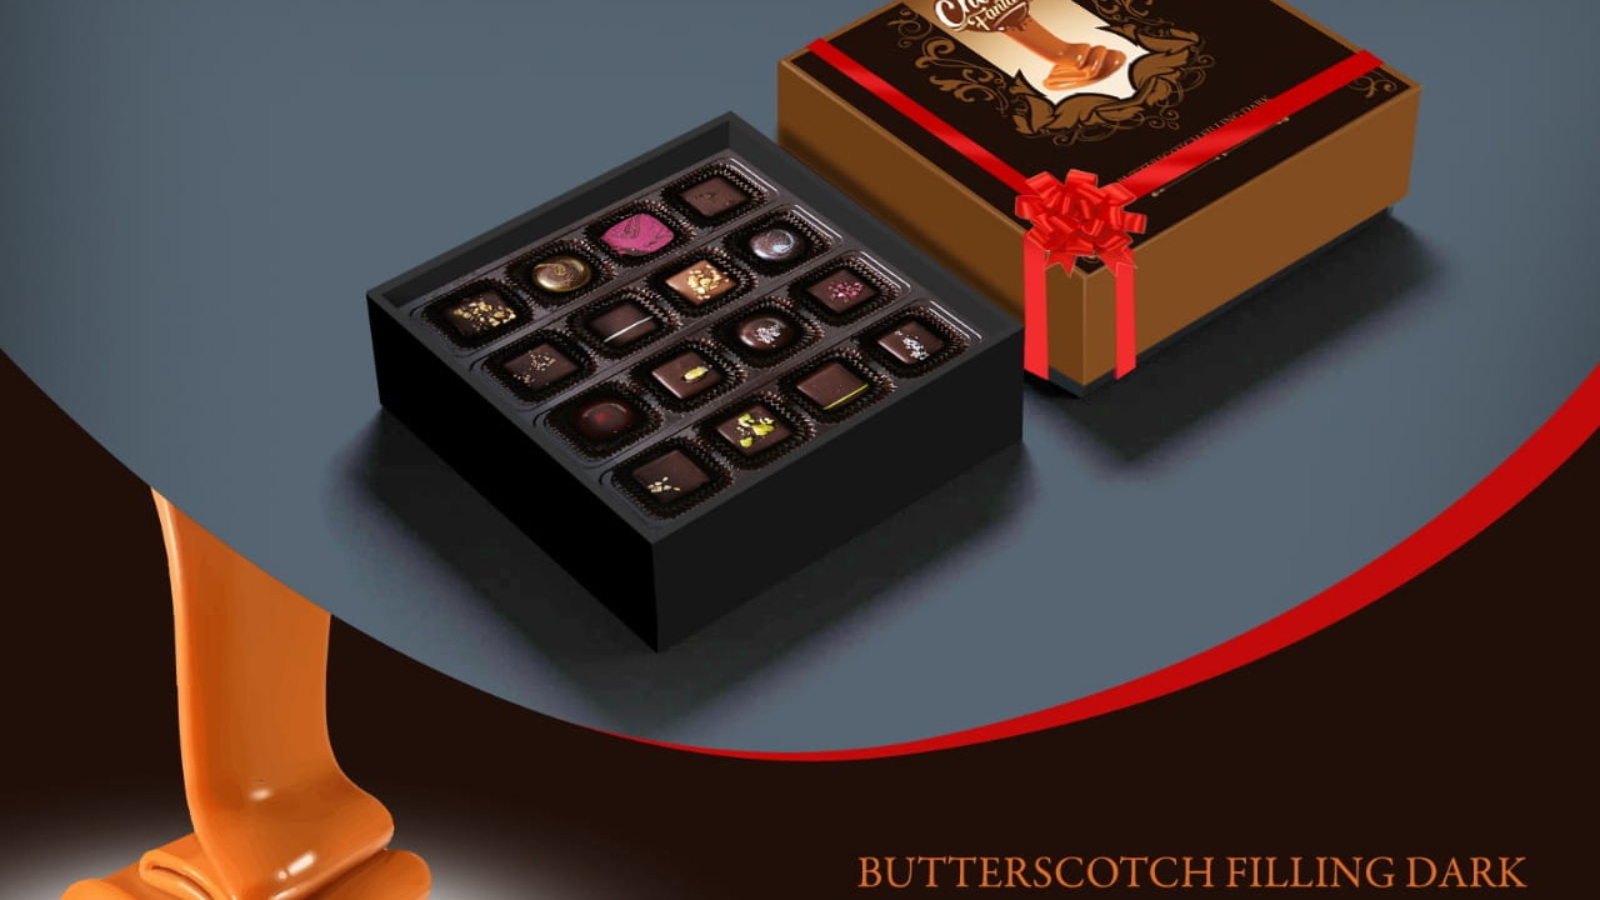 Butterscotch filling dark chocolates box